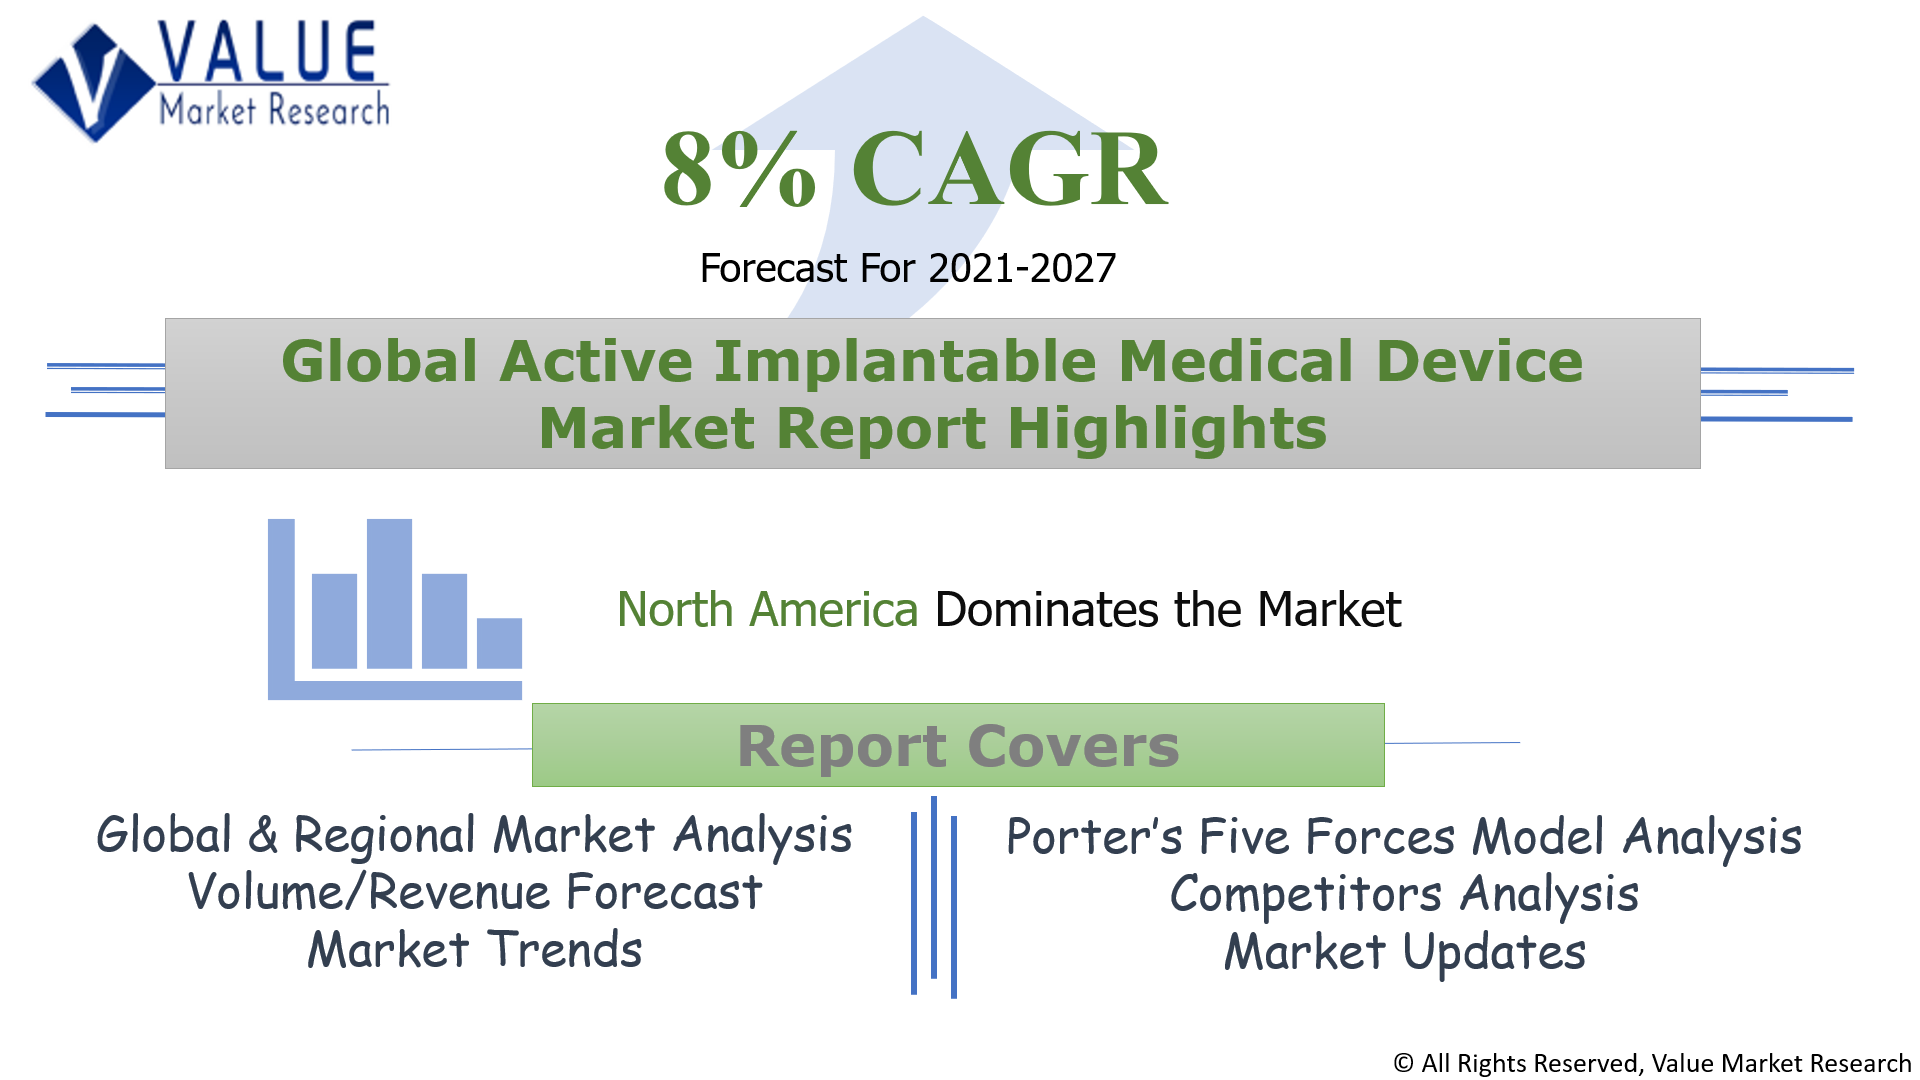 Global Active Implantable Medical Device Market Share